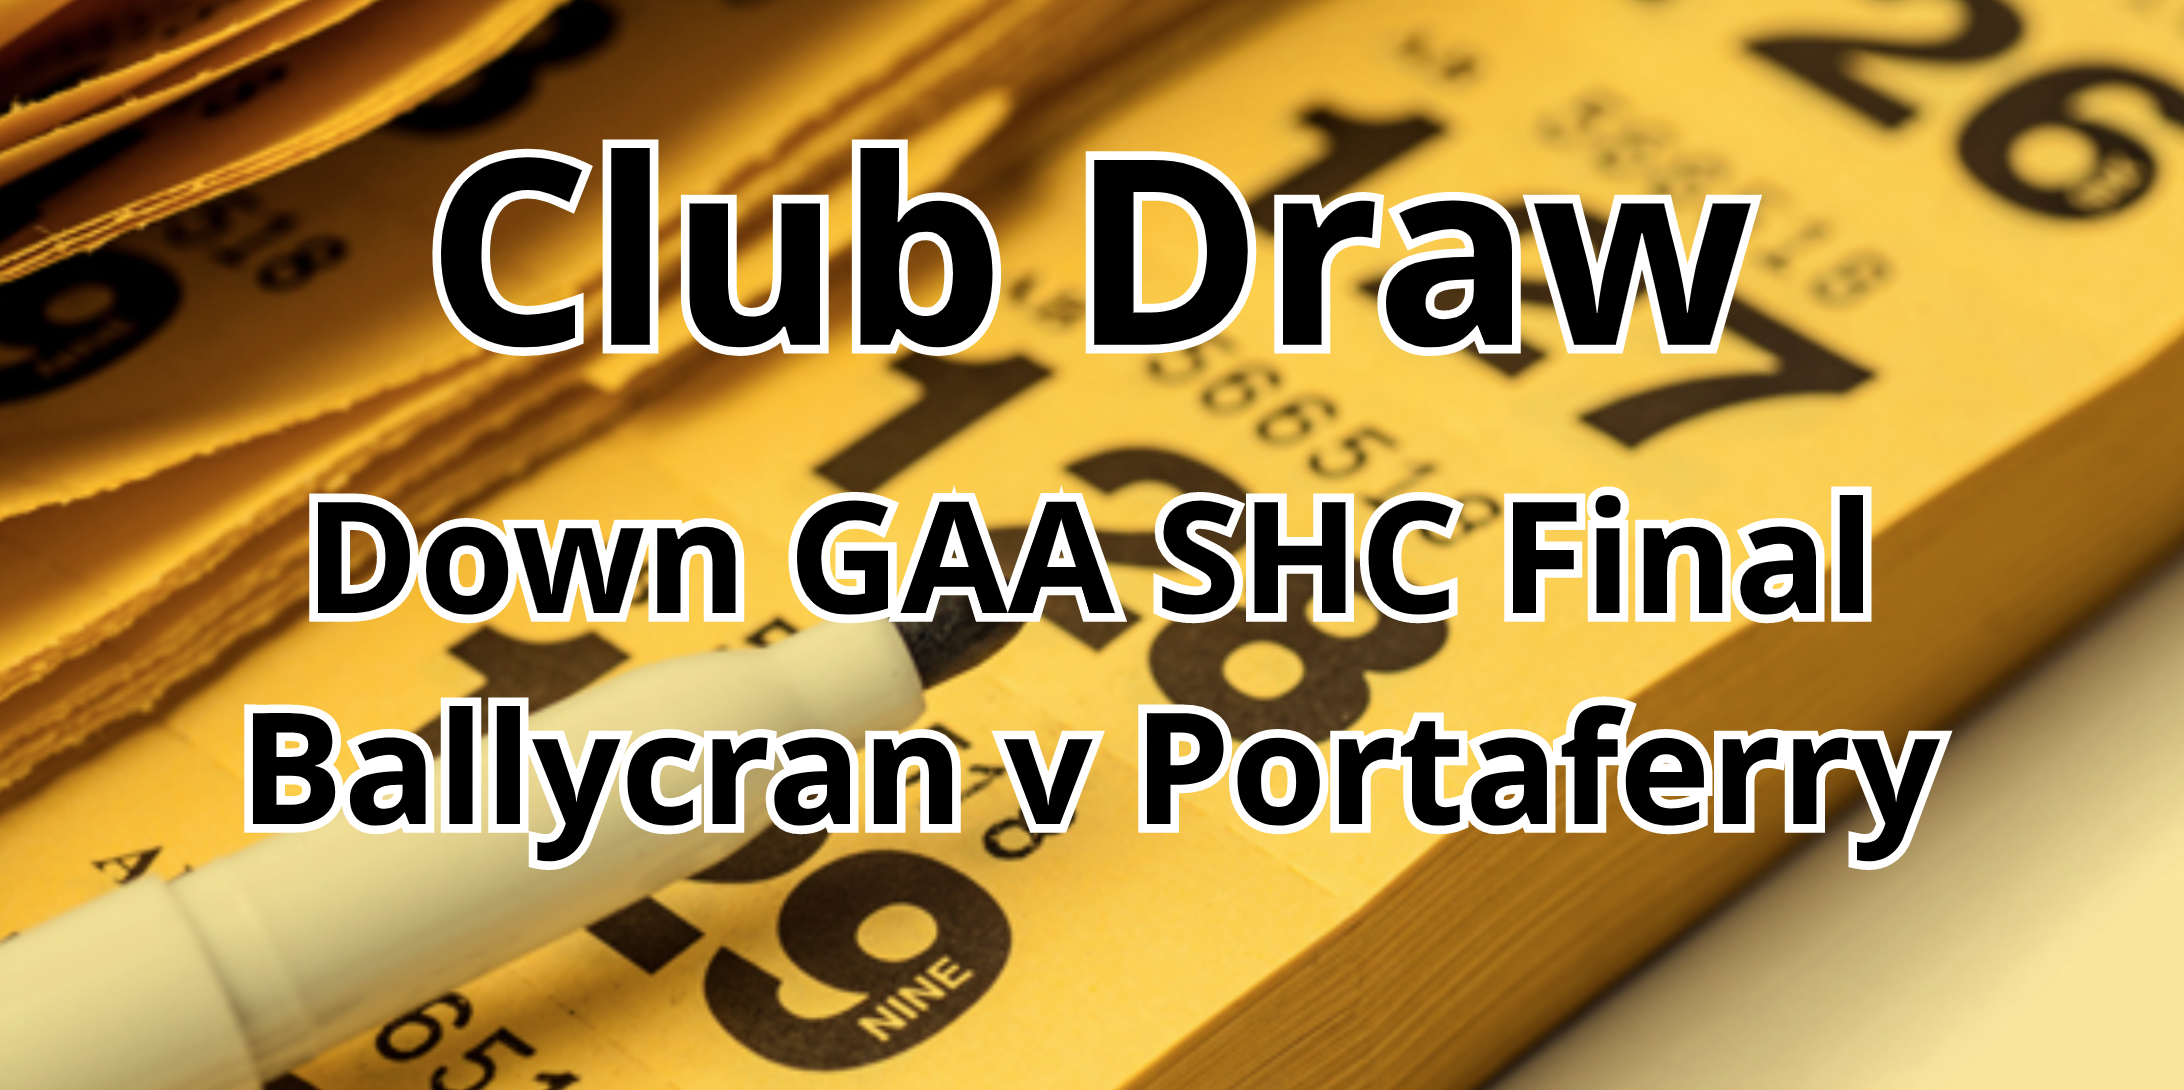 Down GAA SHC ticket draw for Ballycran v Portaferry